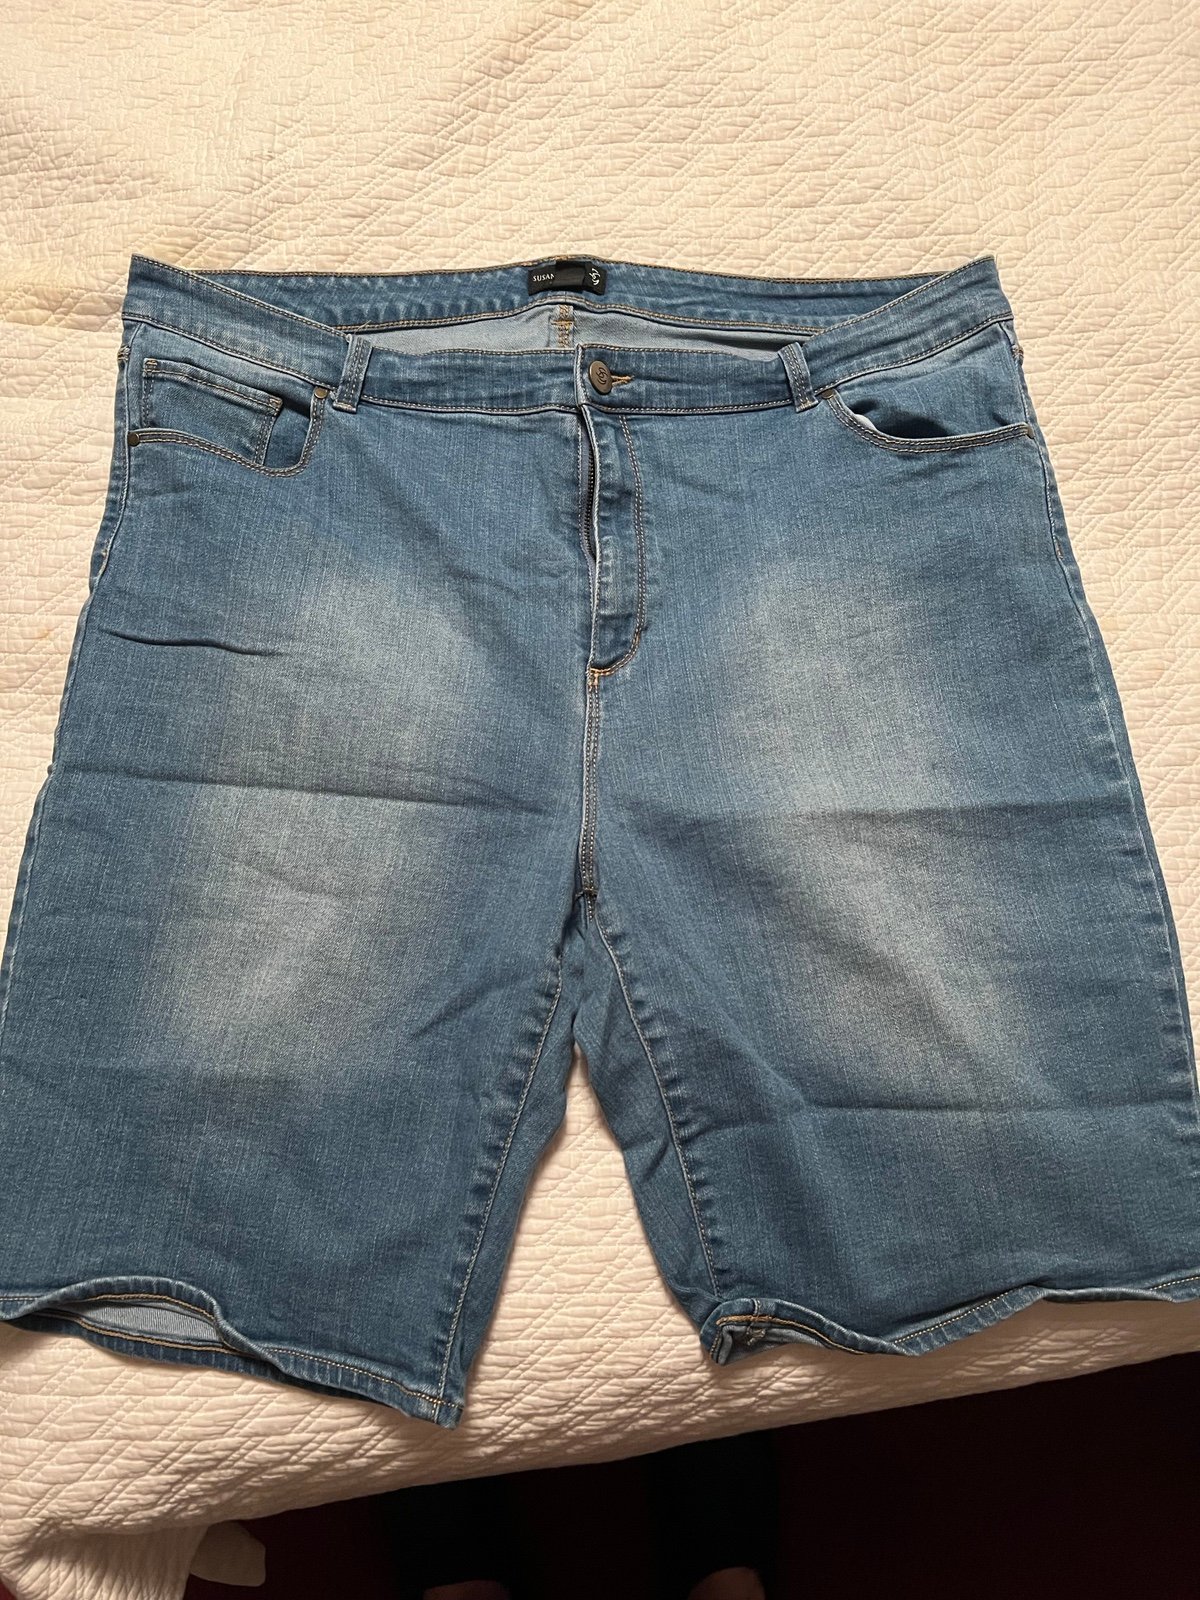 Exclusive womens jean shorts on8KmgDD7 just buy it